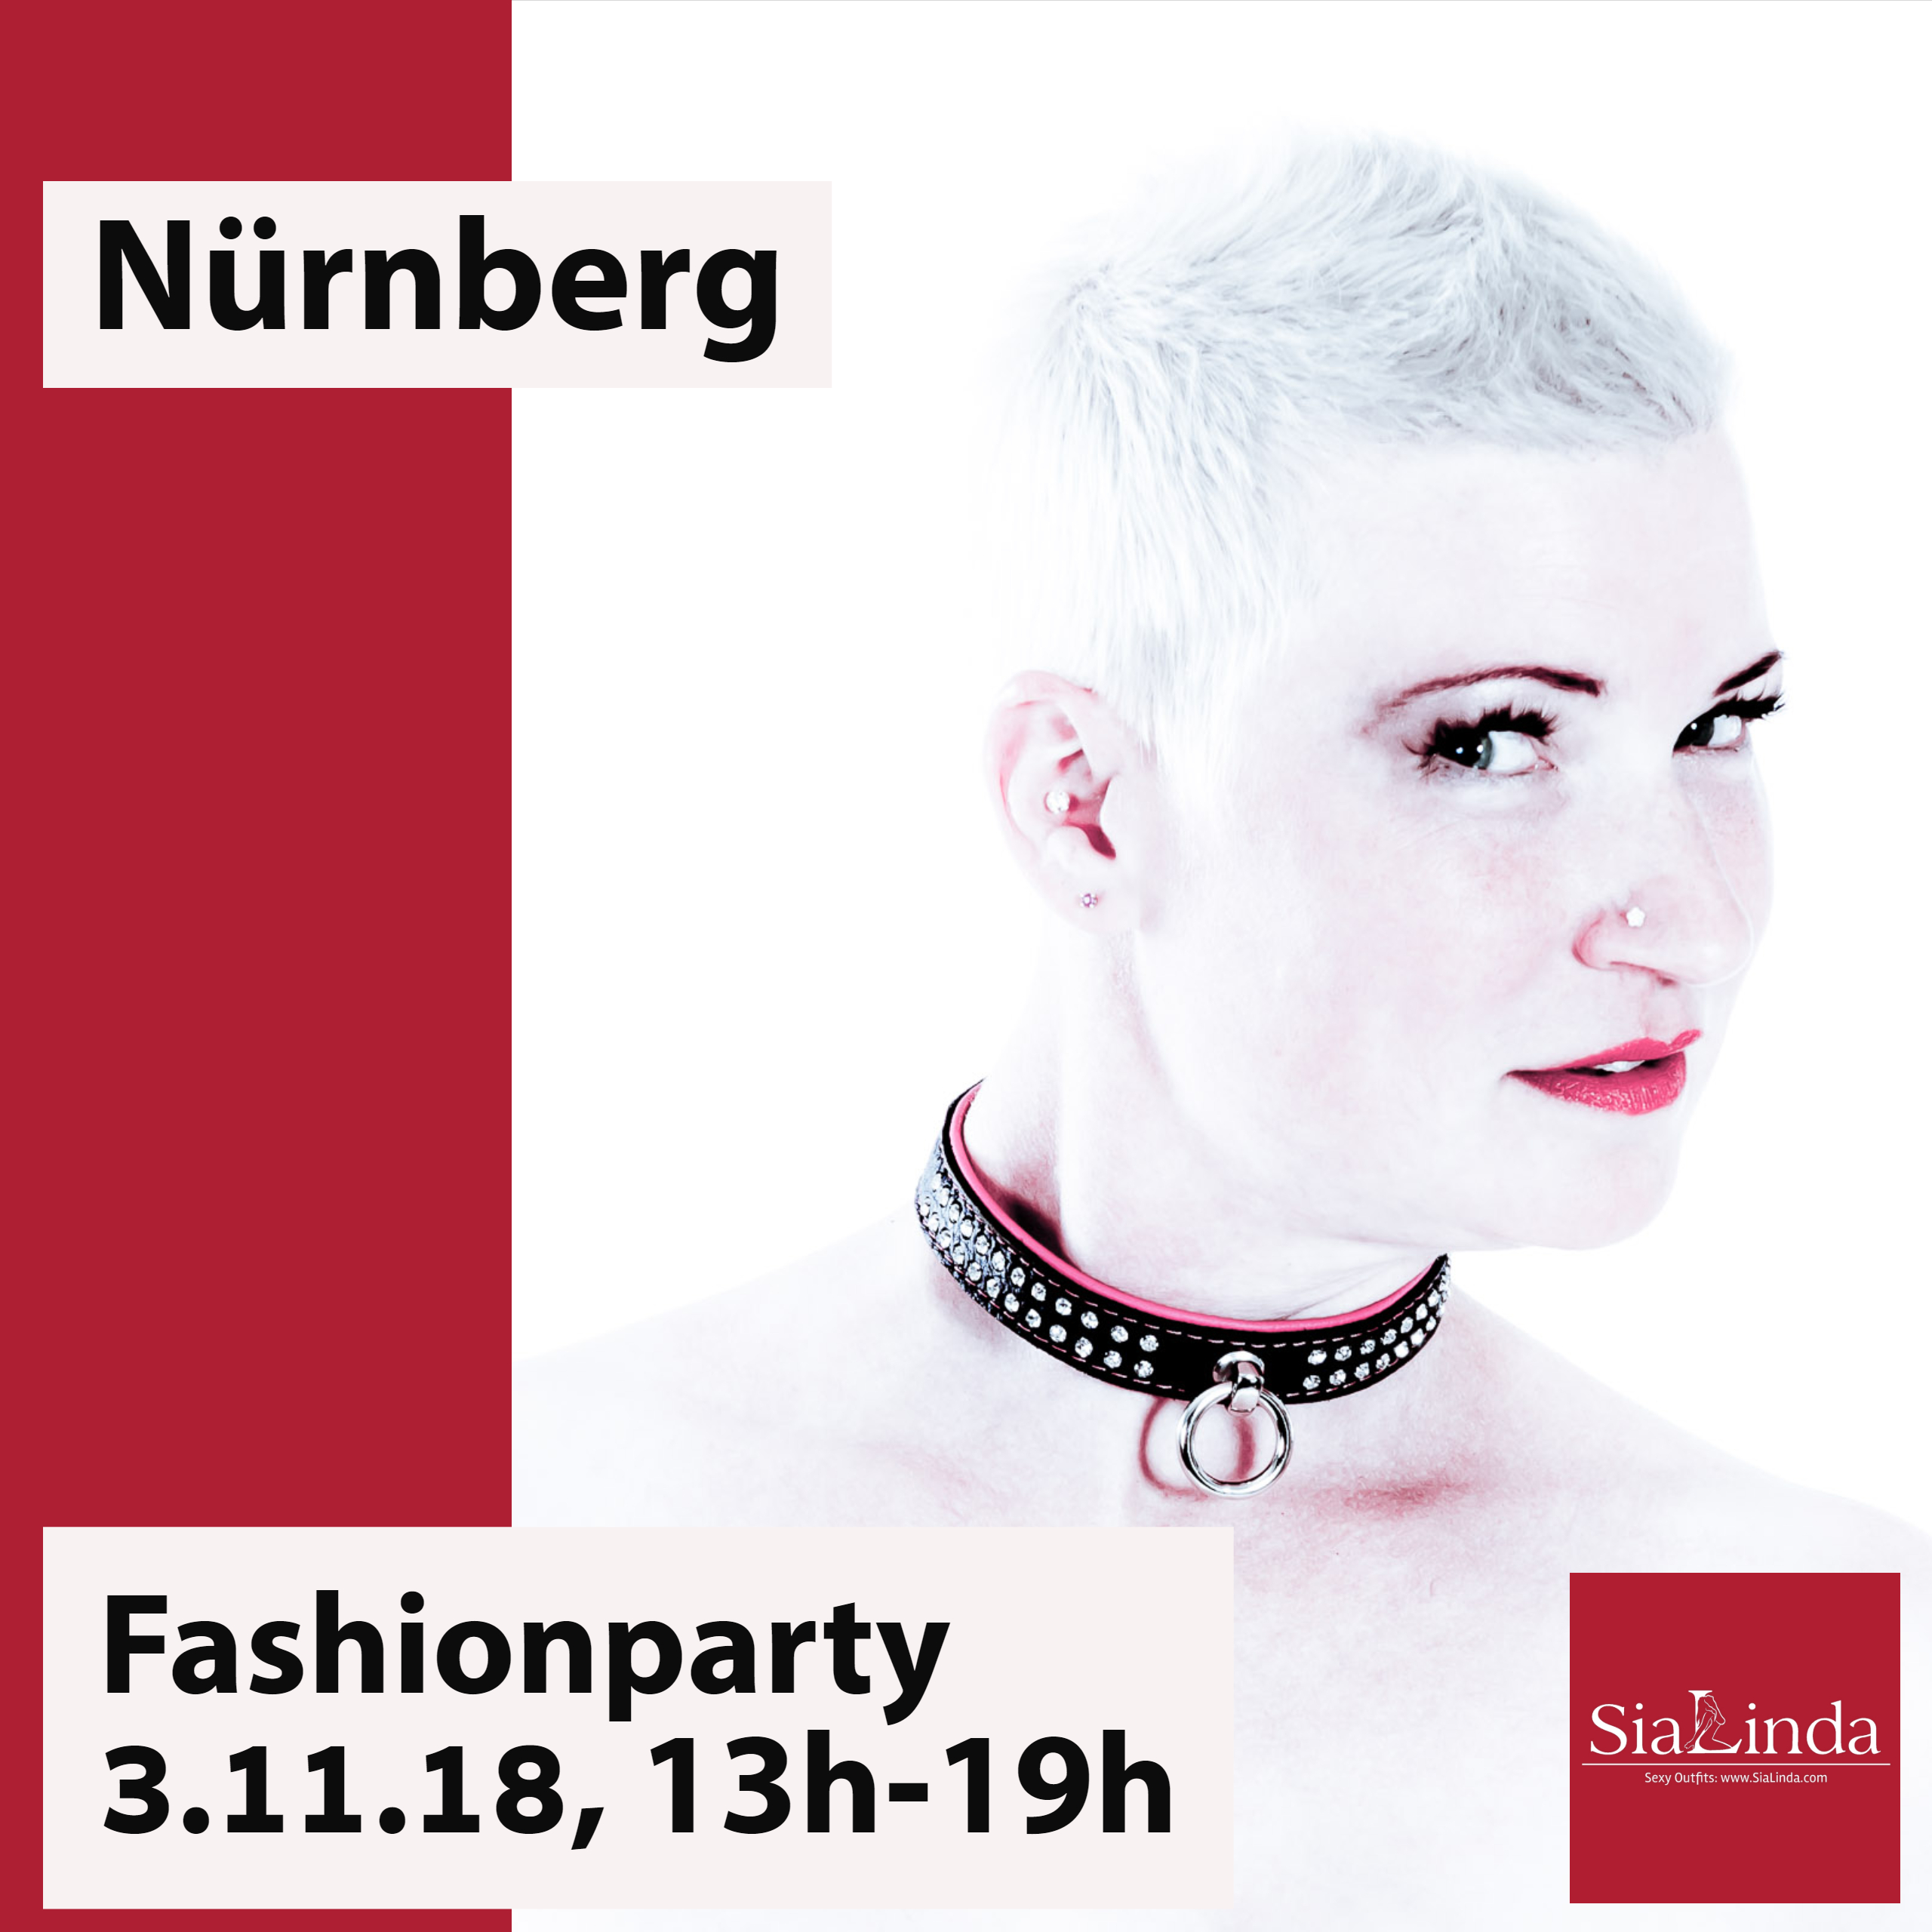 Fashionparty Nürnberg 3.11.18